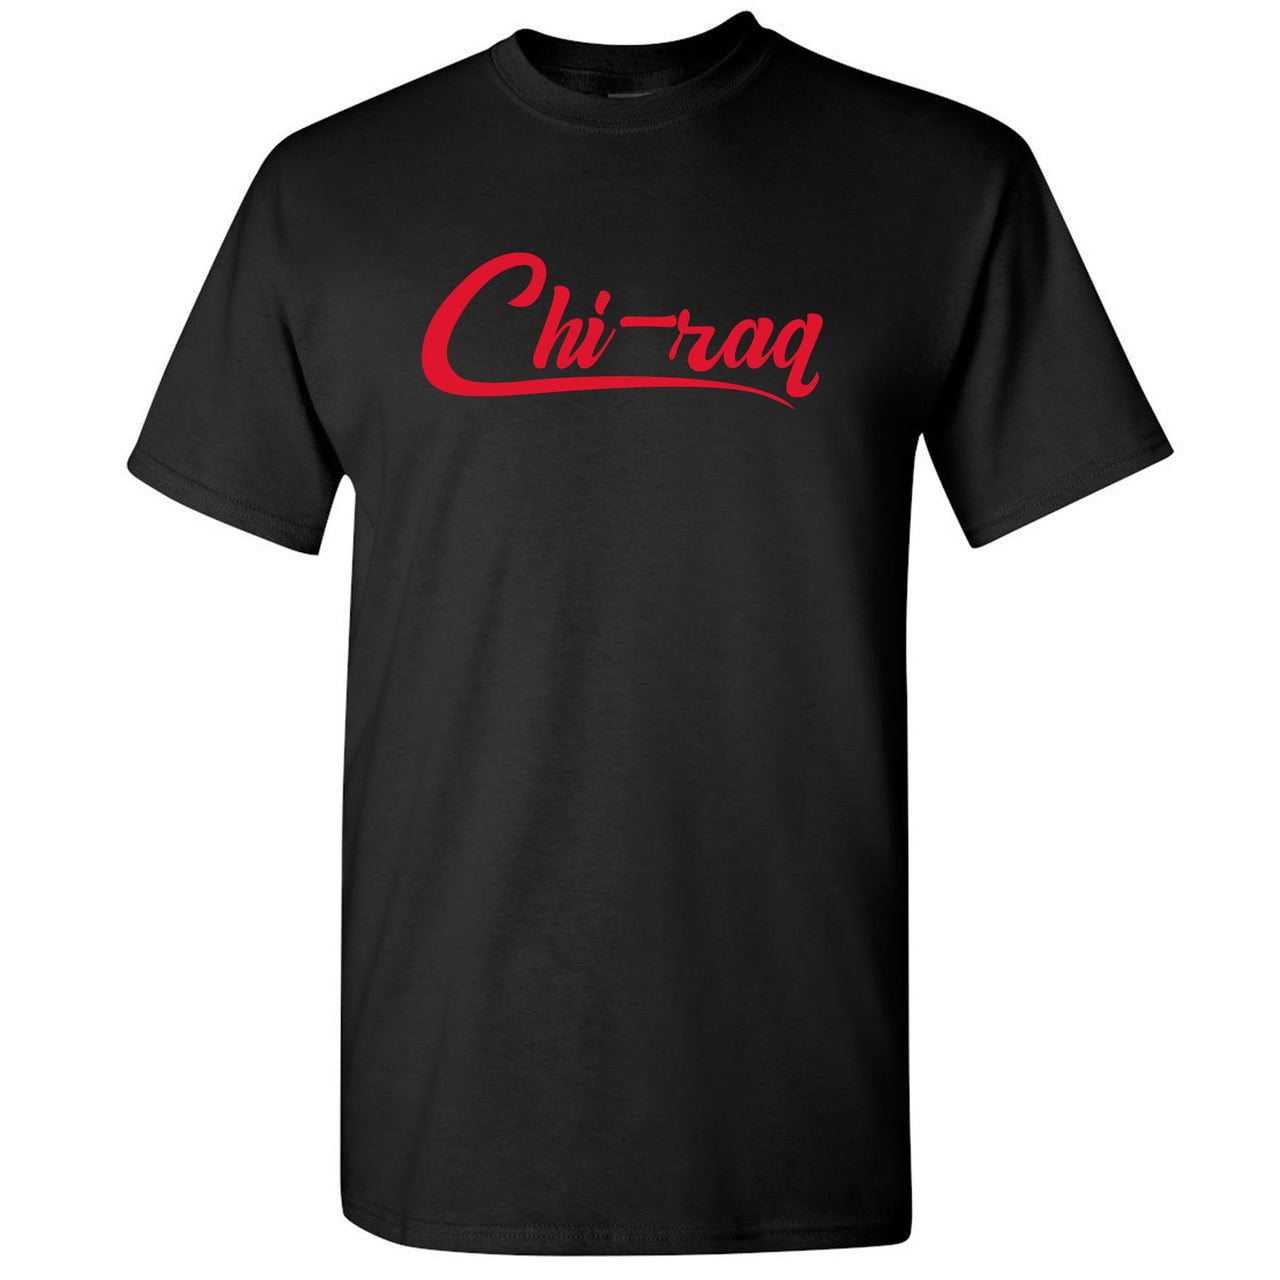 Reflections of a Champion 7s T Shirt | Chiraq Script, Black